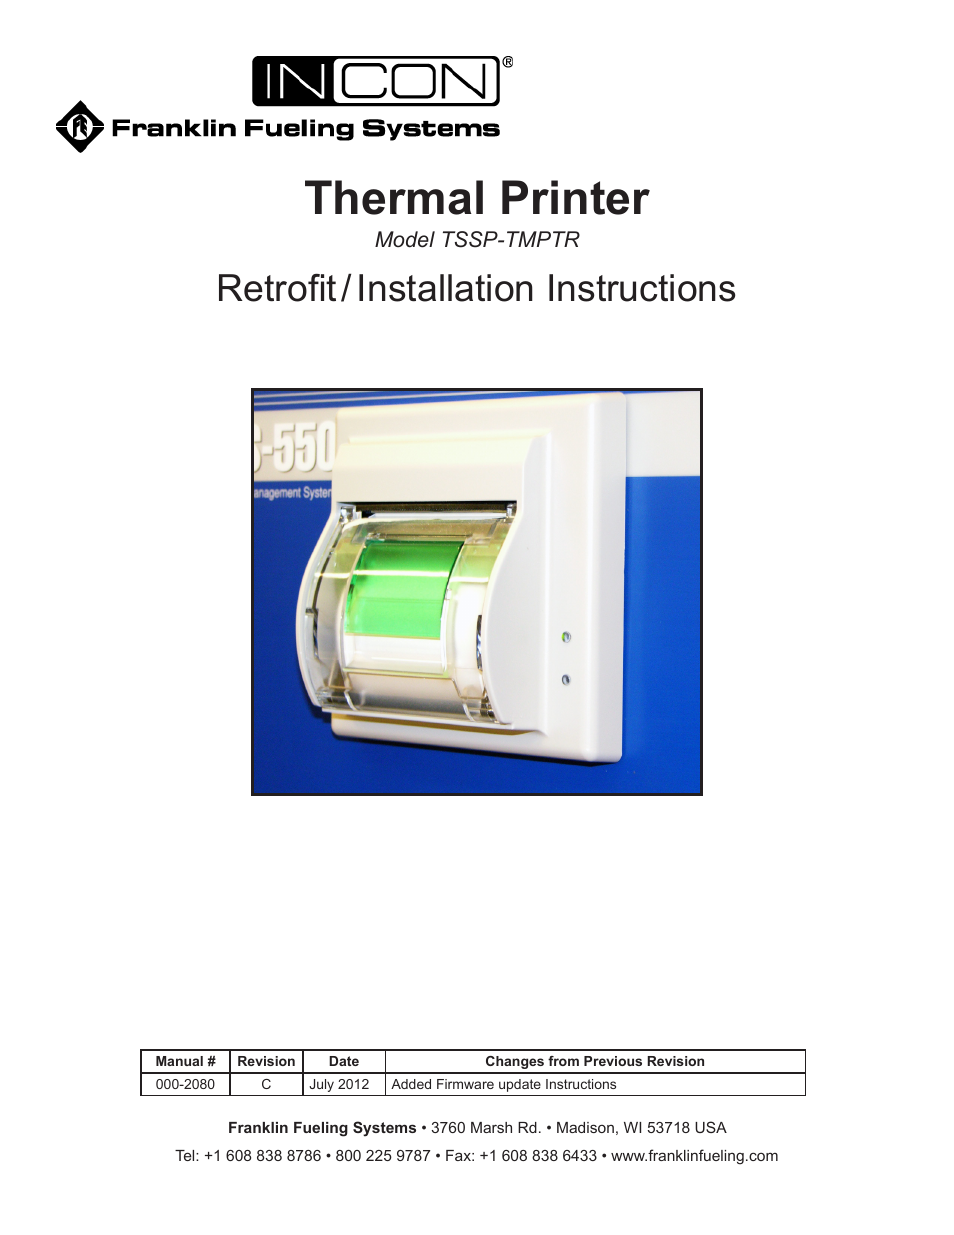 TSSP-TMPTR Thermal Printer